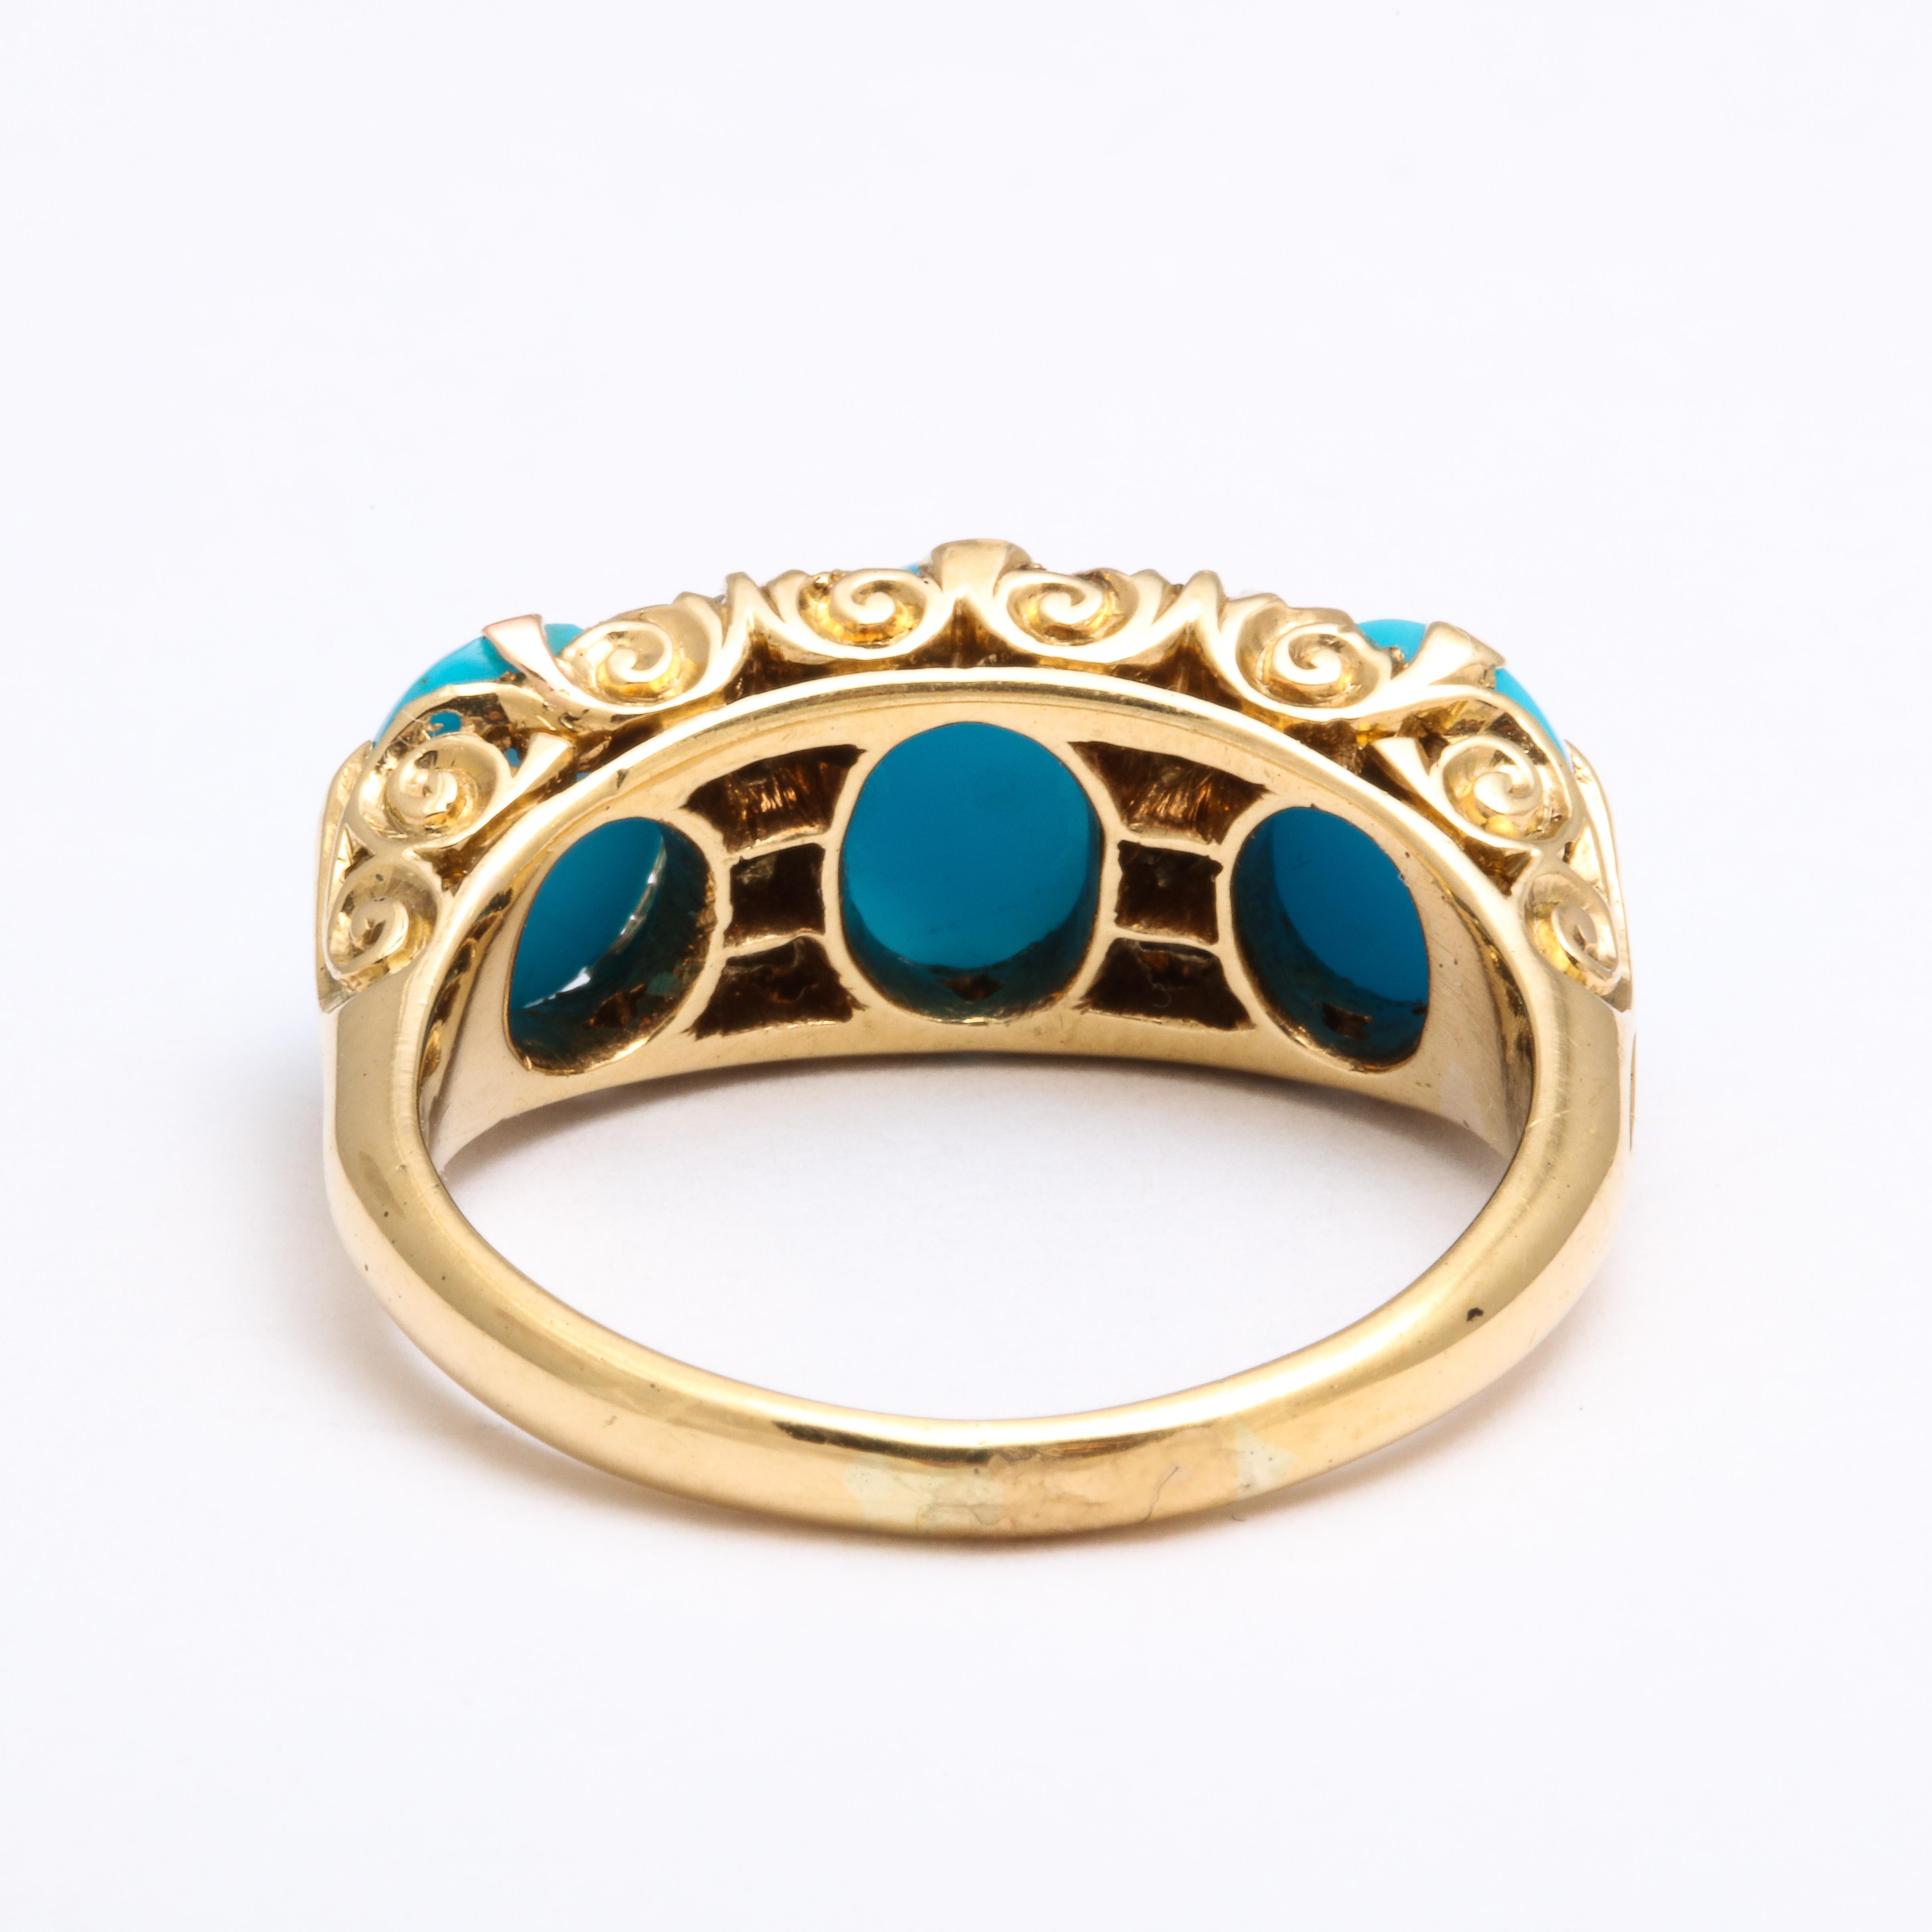 Edwardian 18kt Turquoise and Diamond Ring 1